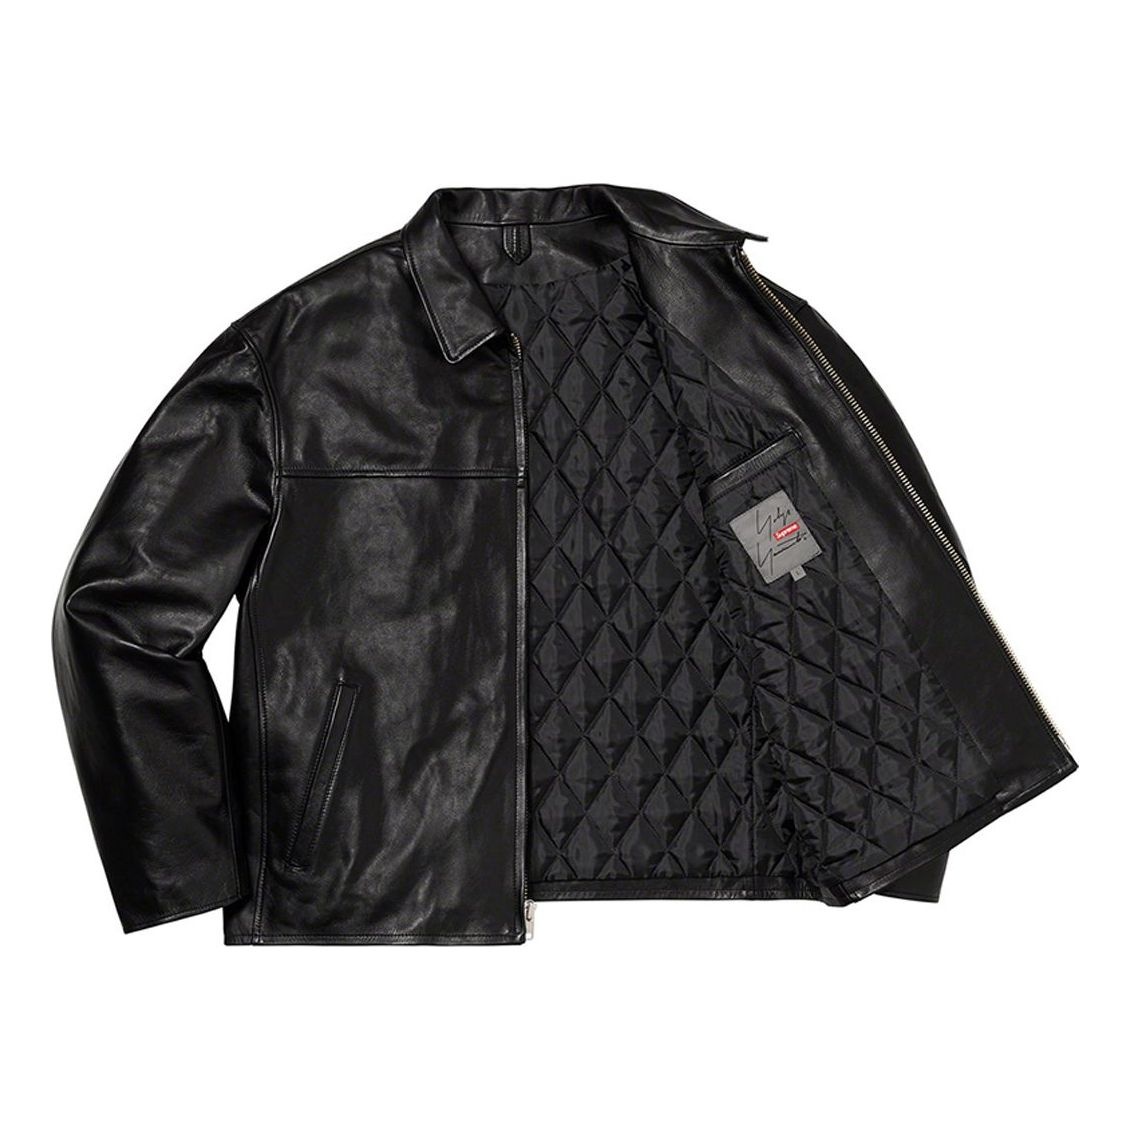 Supreme x Yohji Yamamoto Leather Work Jacket 'Black White Red' SUP-FW20-105 - 3